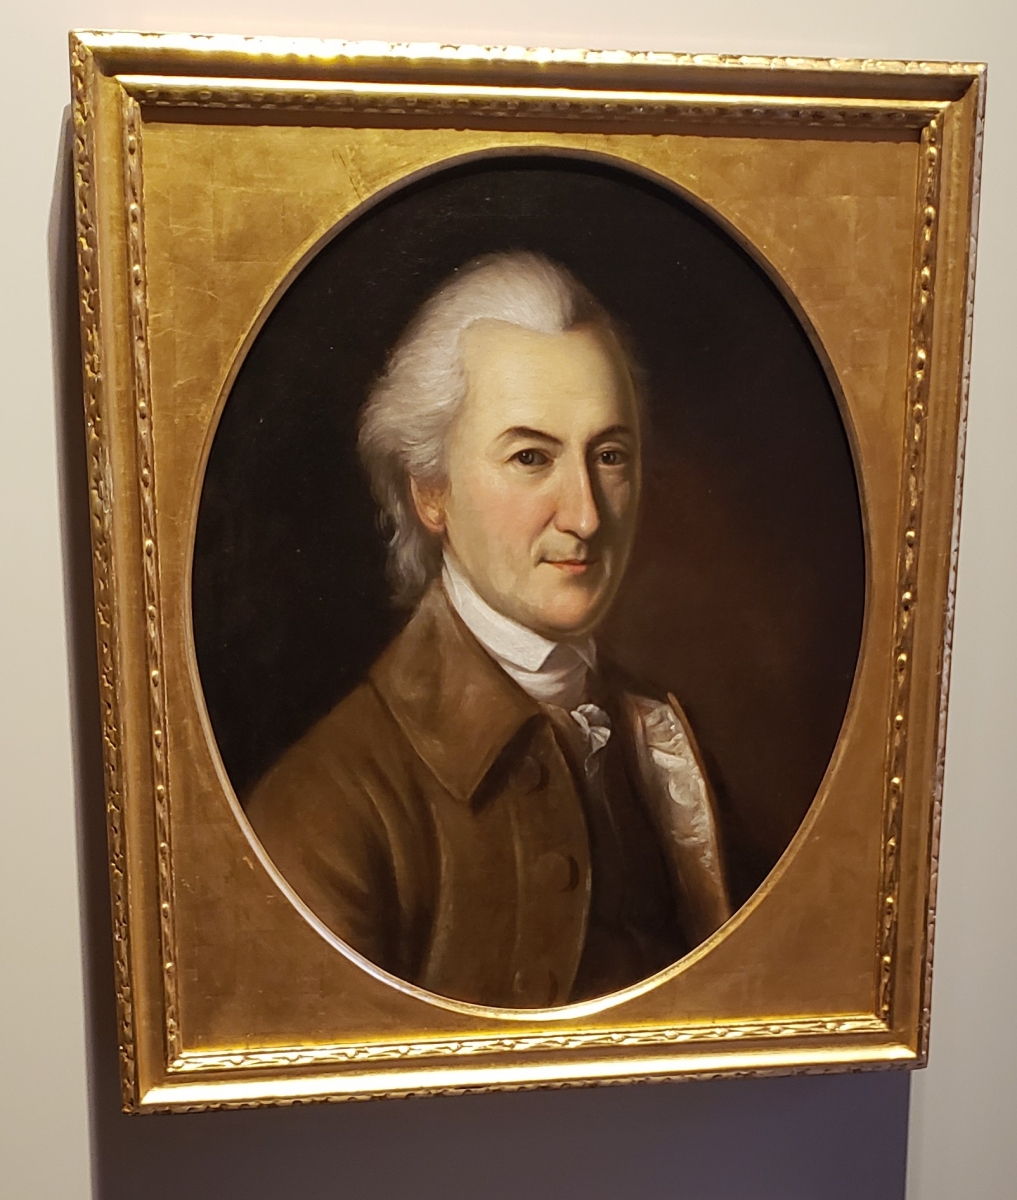 Portrait of John Dickinson that hangs in the 2nd Bank Portrait Gallery